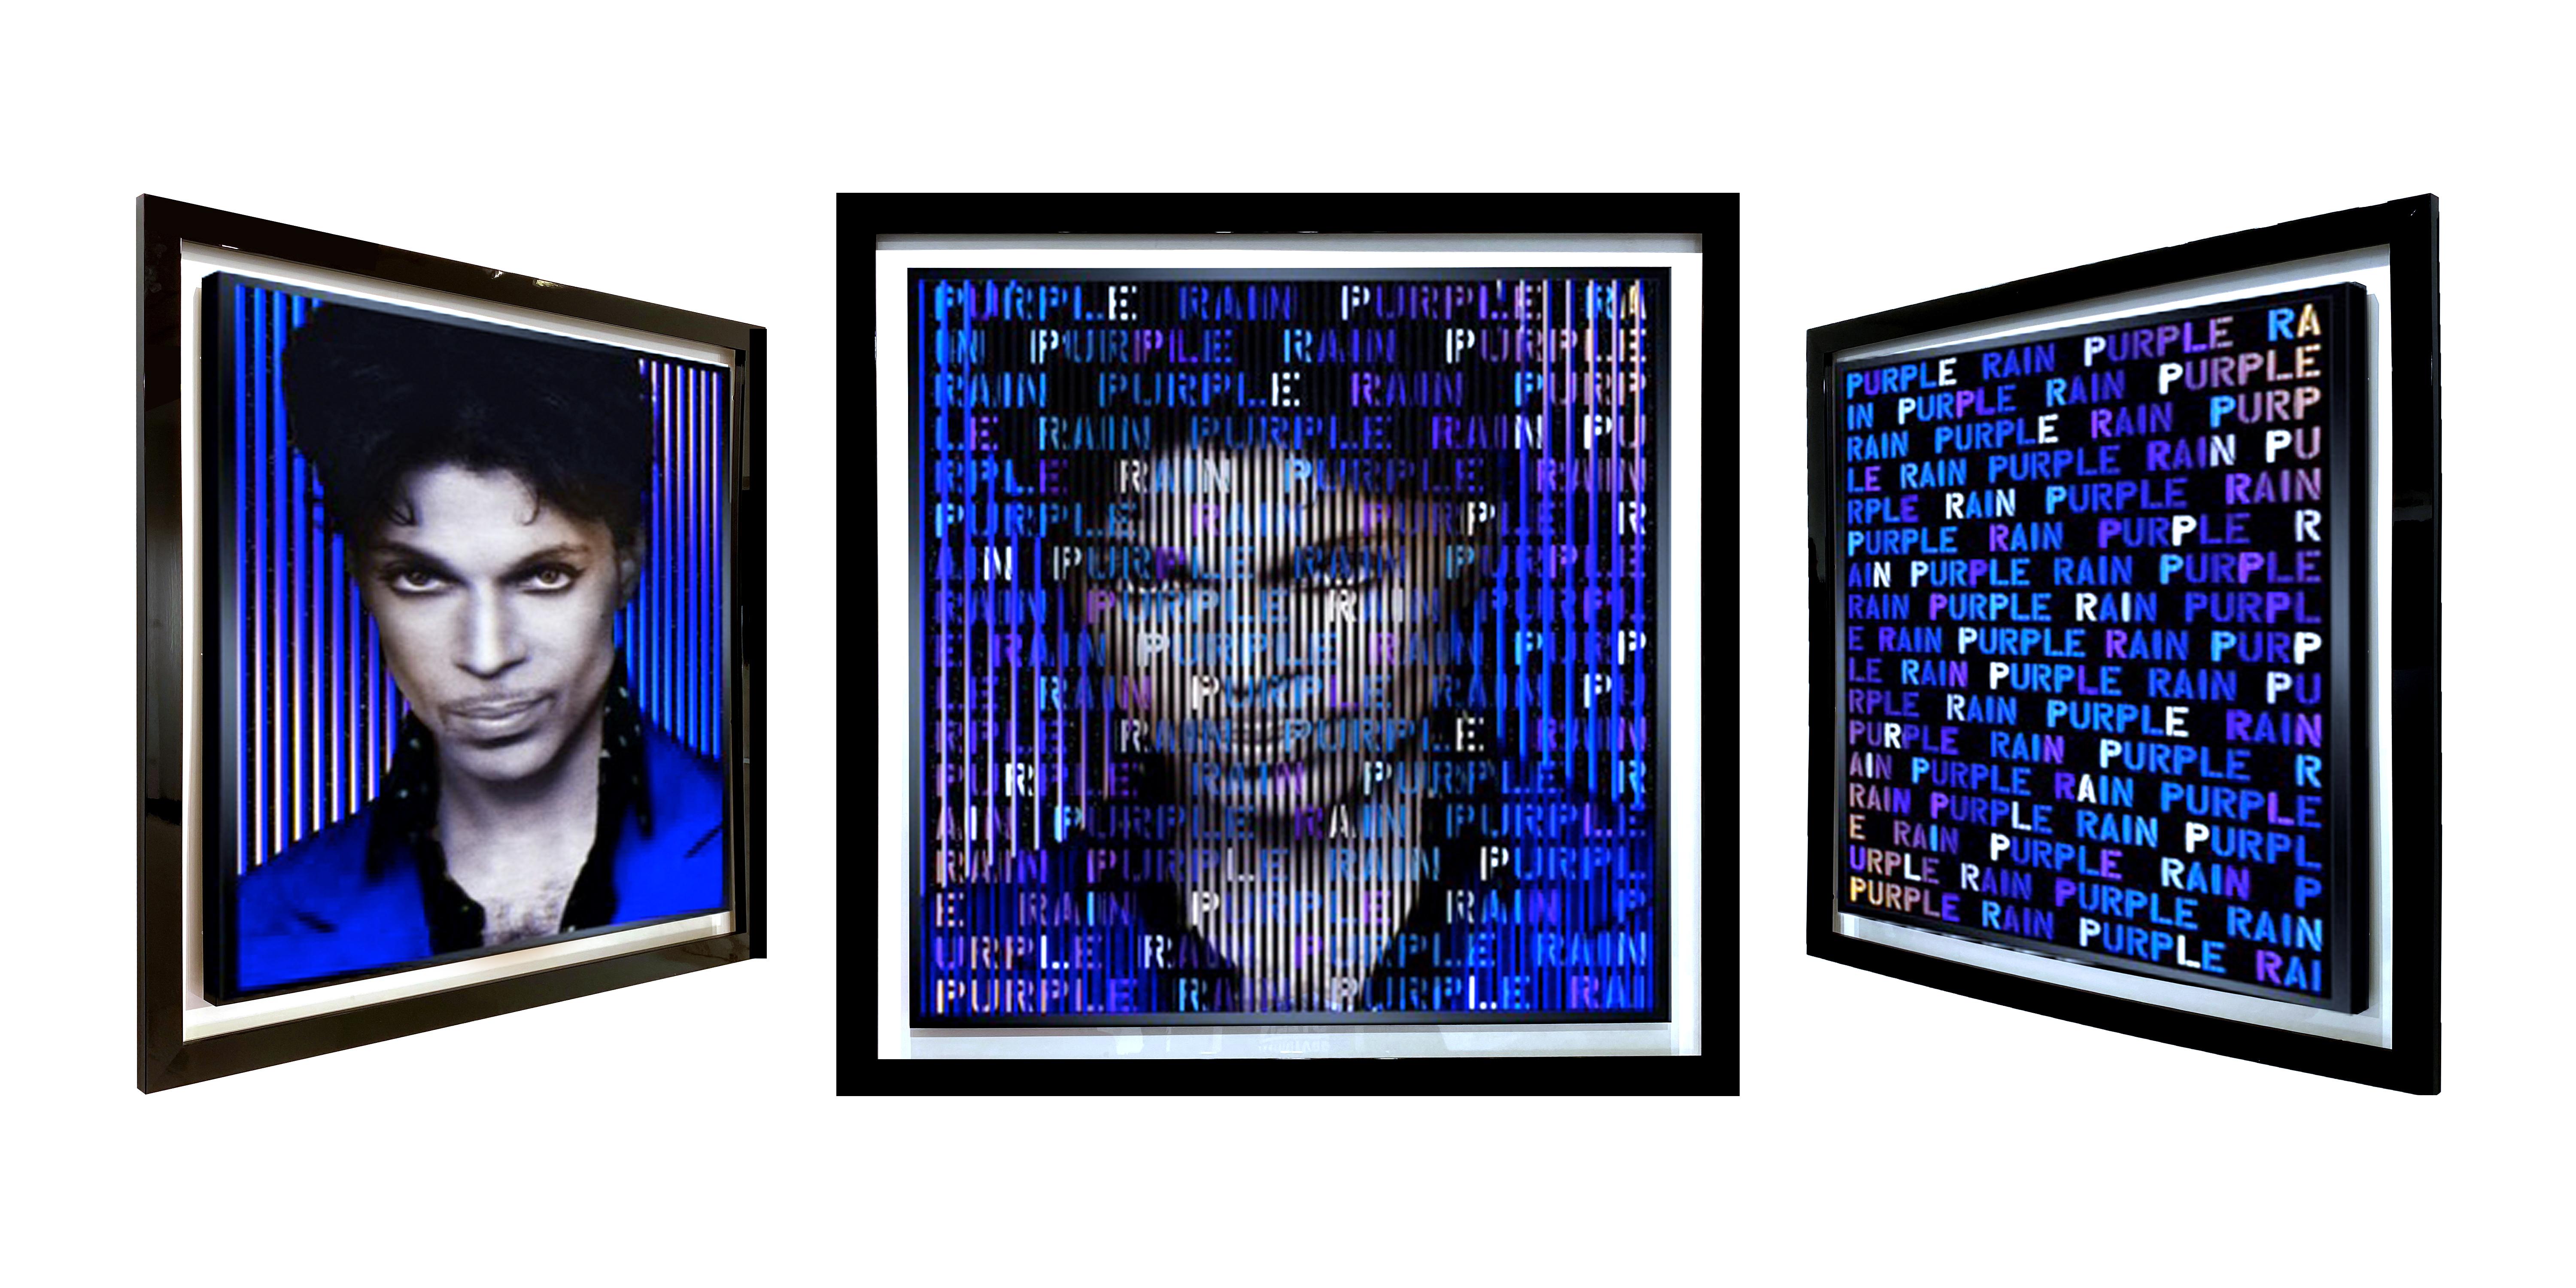 Beautiful Prince, Kinetic - Mixed Media - Mixed Media Art by Patrick Rubinstein